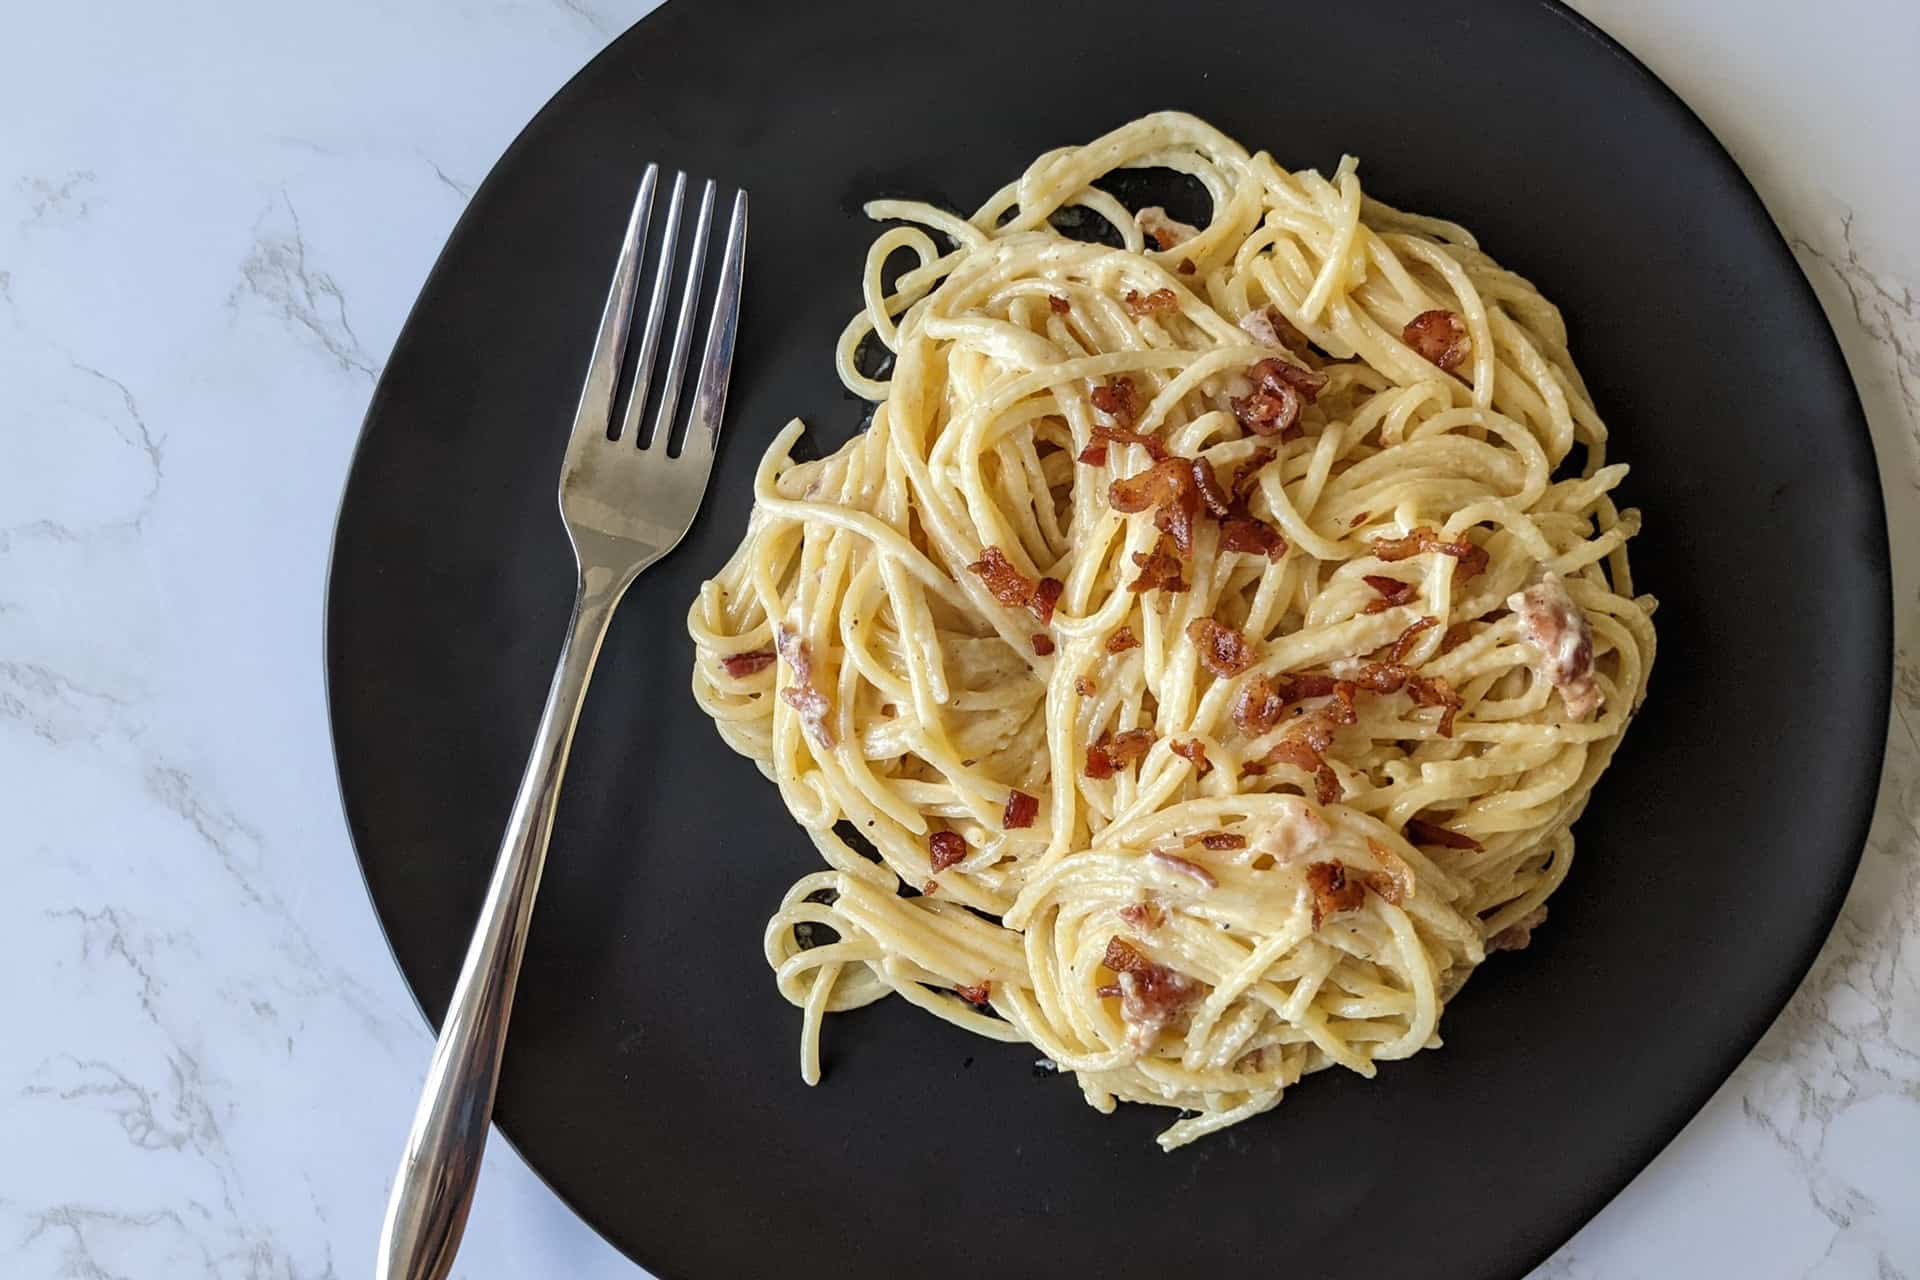 A plate of spaghetti carbonara